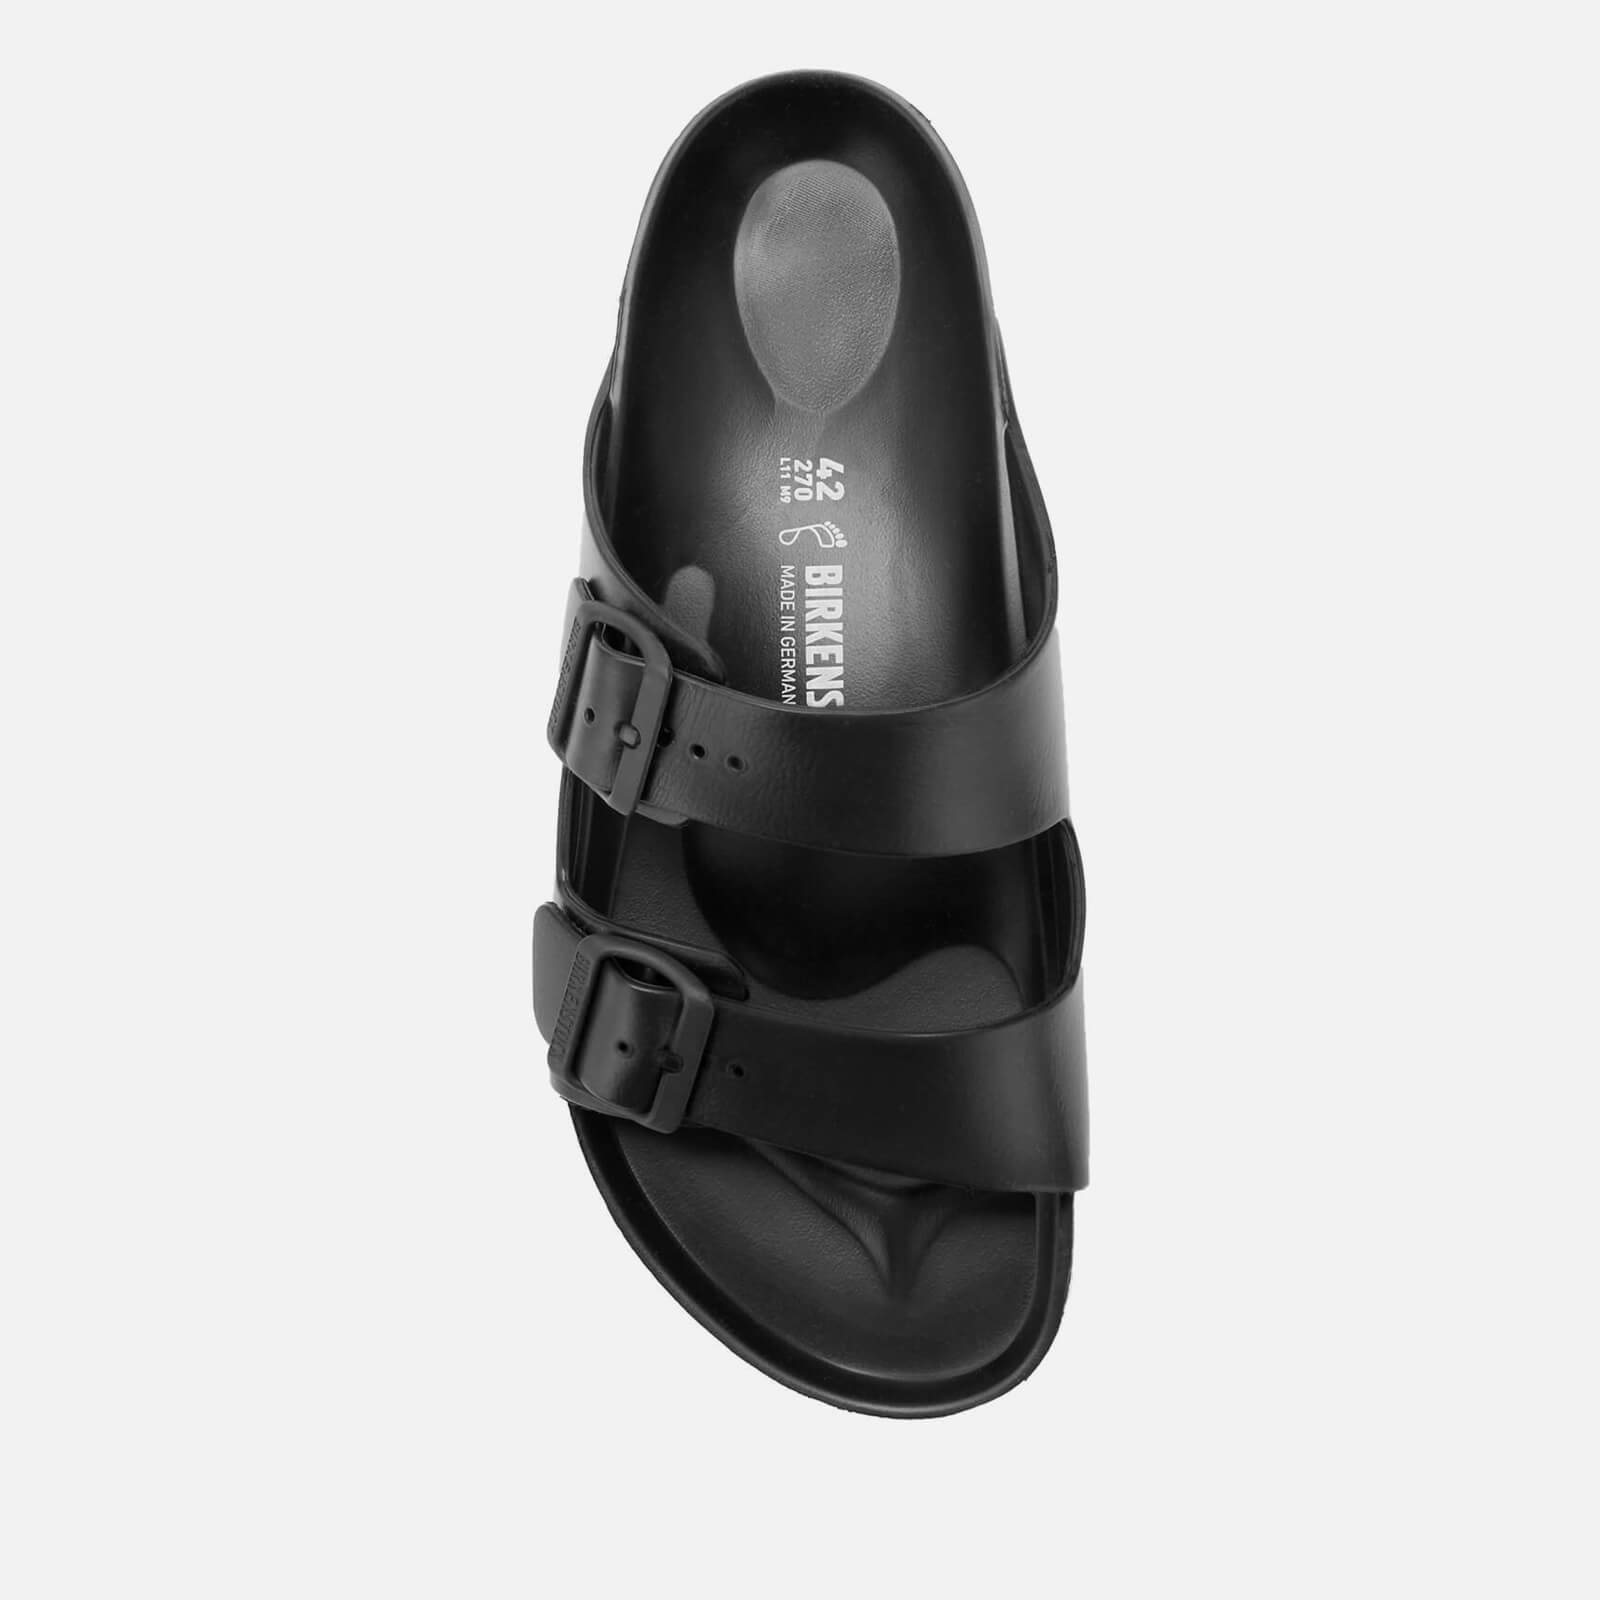 birkenstock men's arizona eva double strap sandals - black - uk 8.5